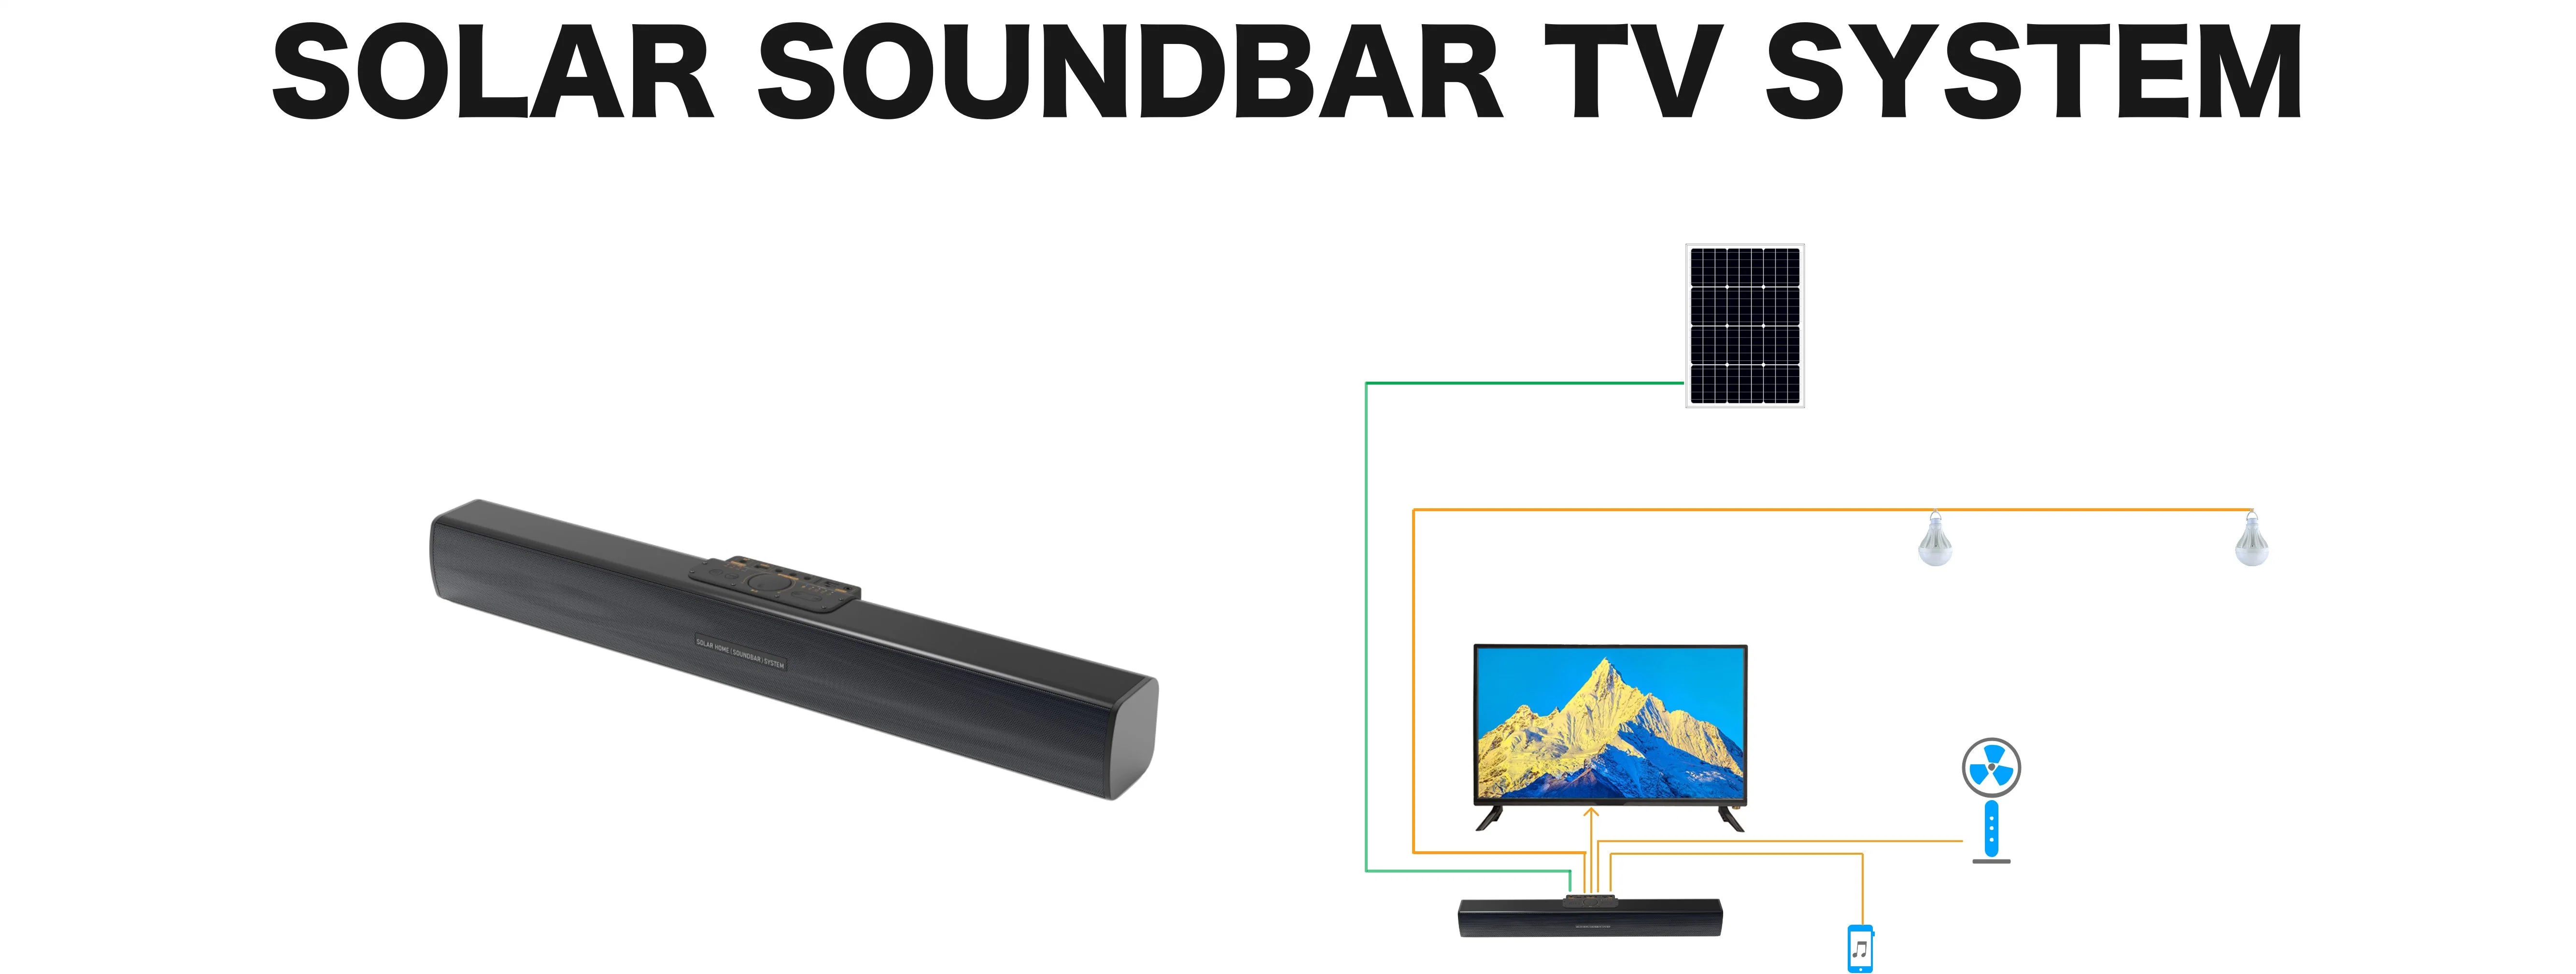 Solar Soundbar TV System Solar Energy Storage System for Solar Energy Supply and Solar Entertainment